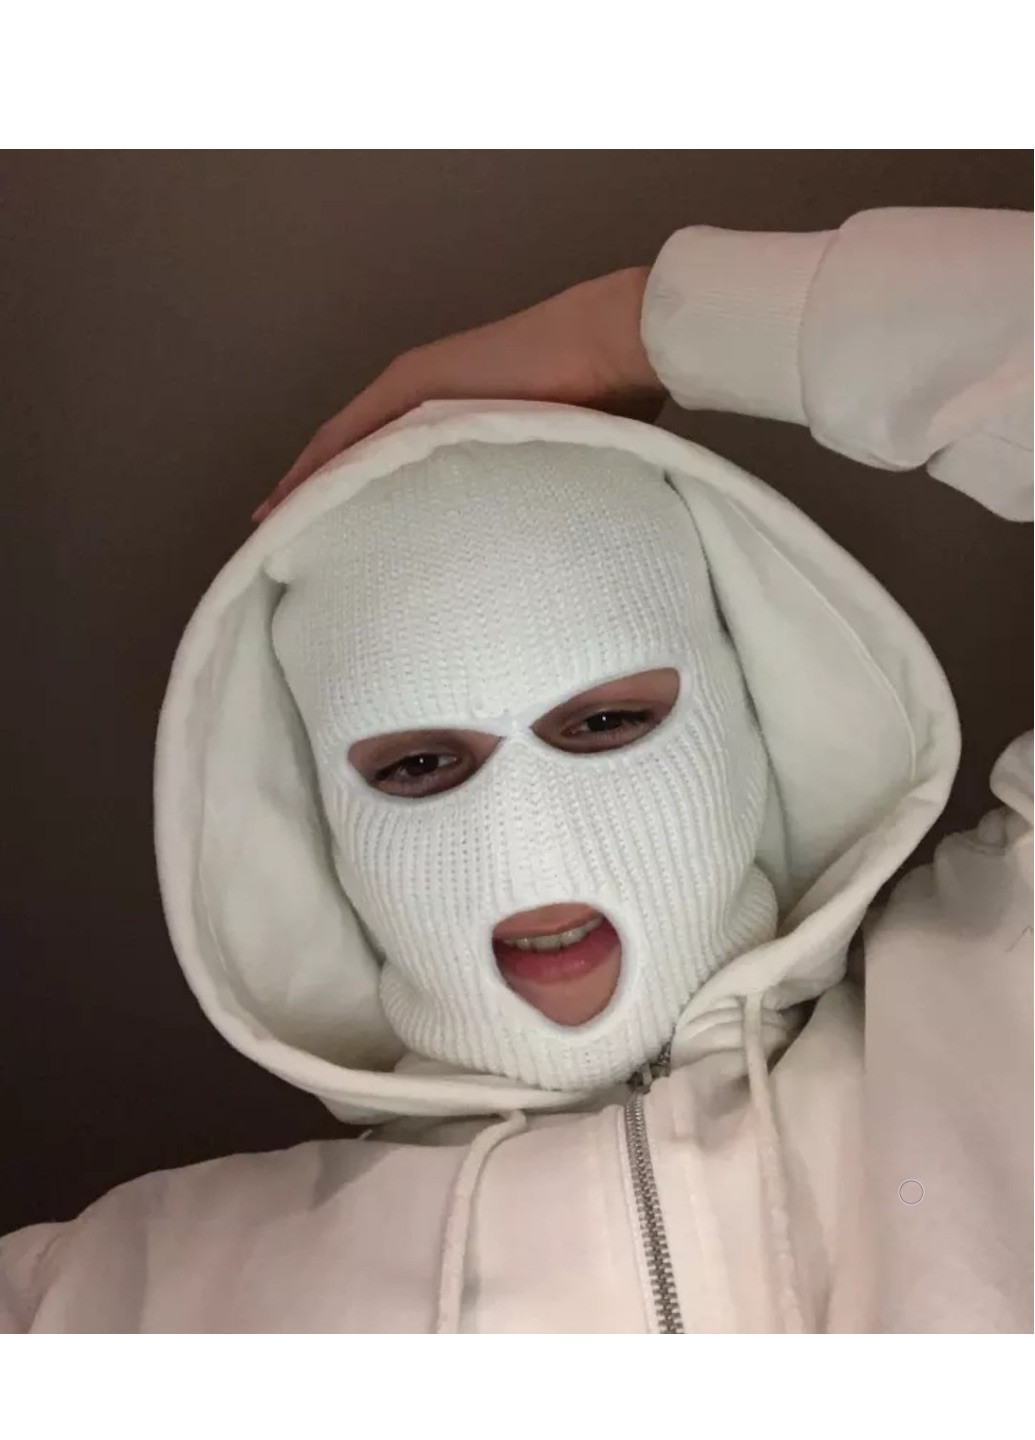 NoName маска бандитка 3 унисекс белый однотонный белый спортивный хлопок производство - Тайвань